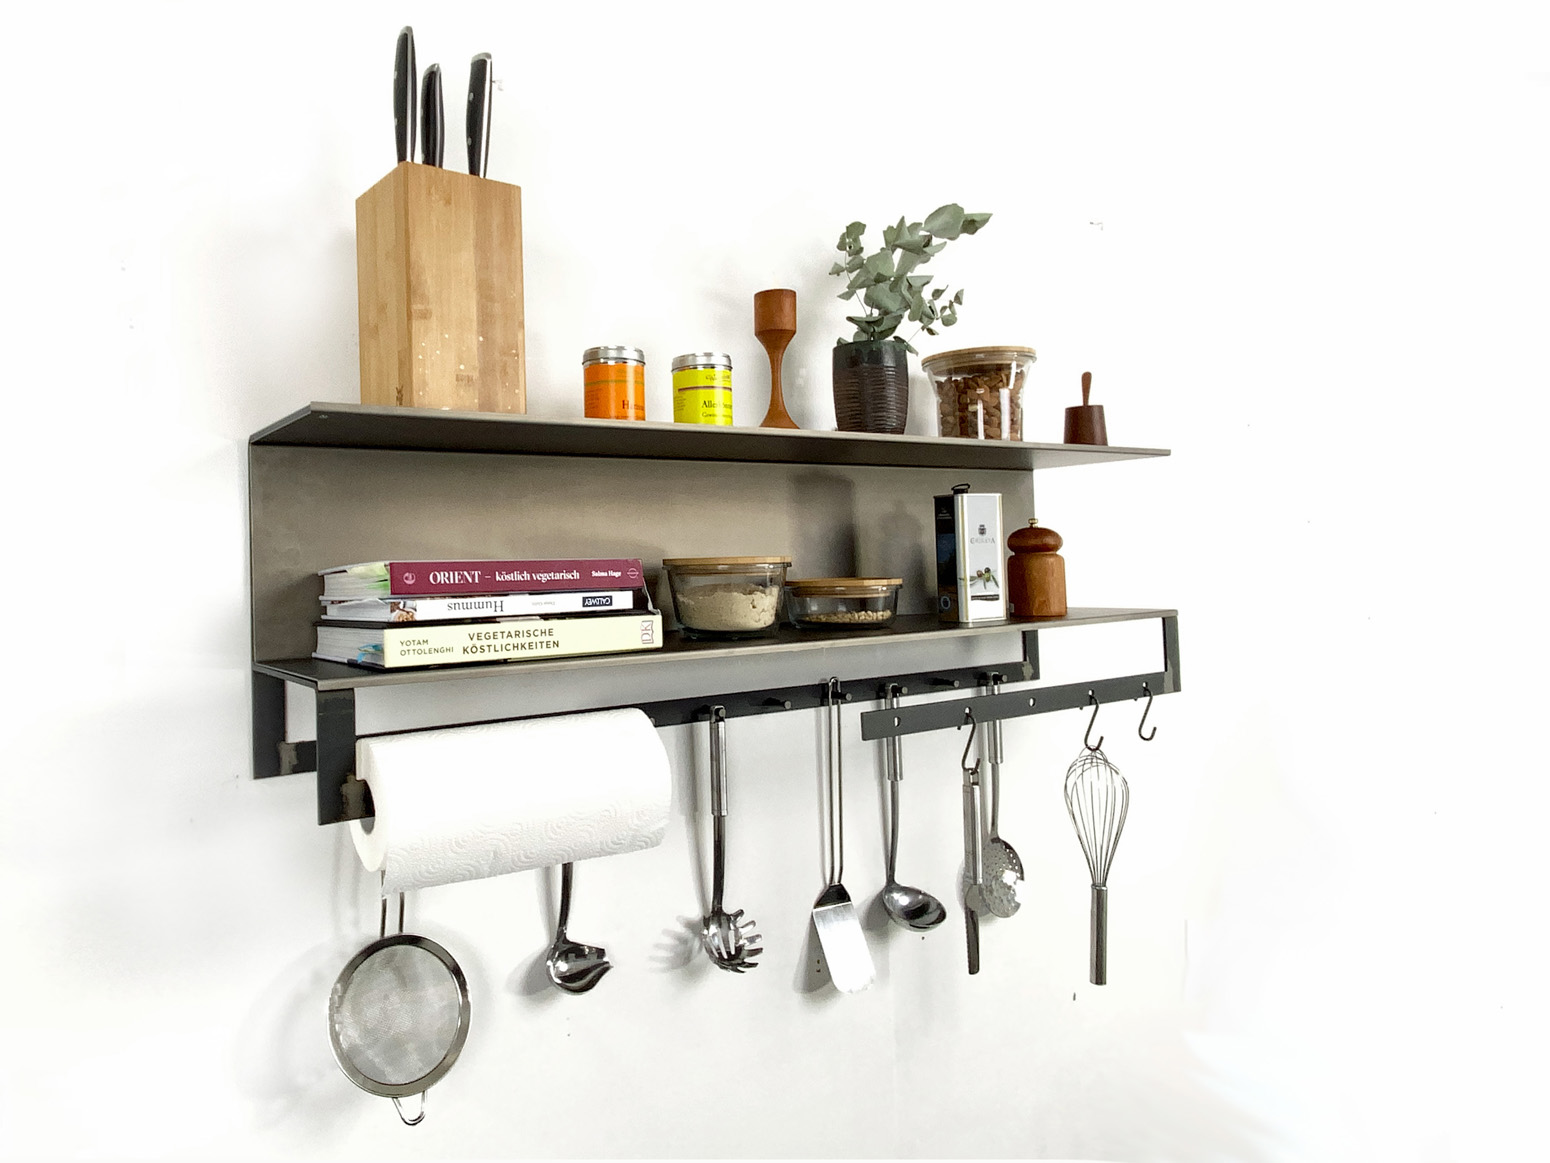 Kitchenshelf / Wall shelf for Kitchen-Accessories, herbes, etc., designed by Inga Reichert, made of black untreated crude steel – Industrial Design.